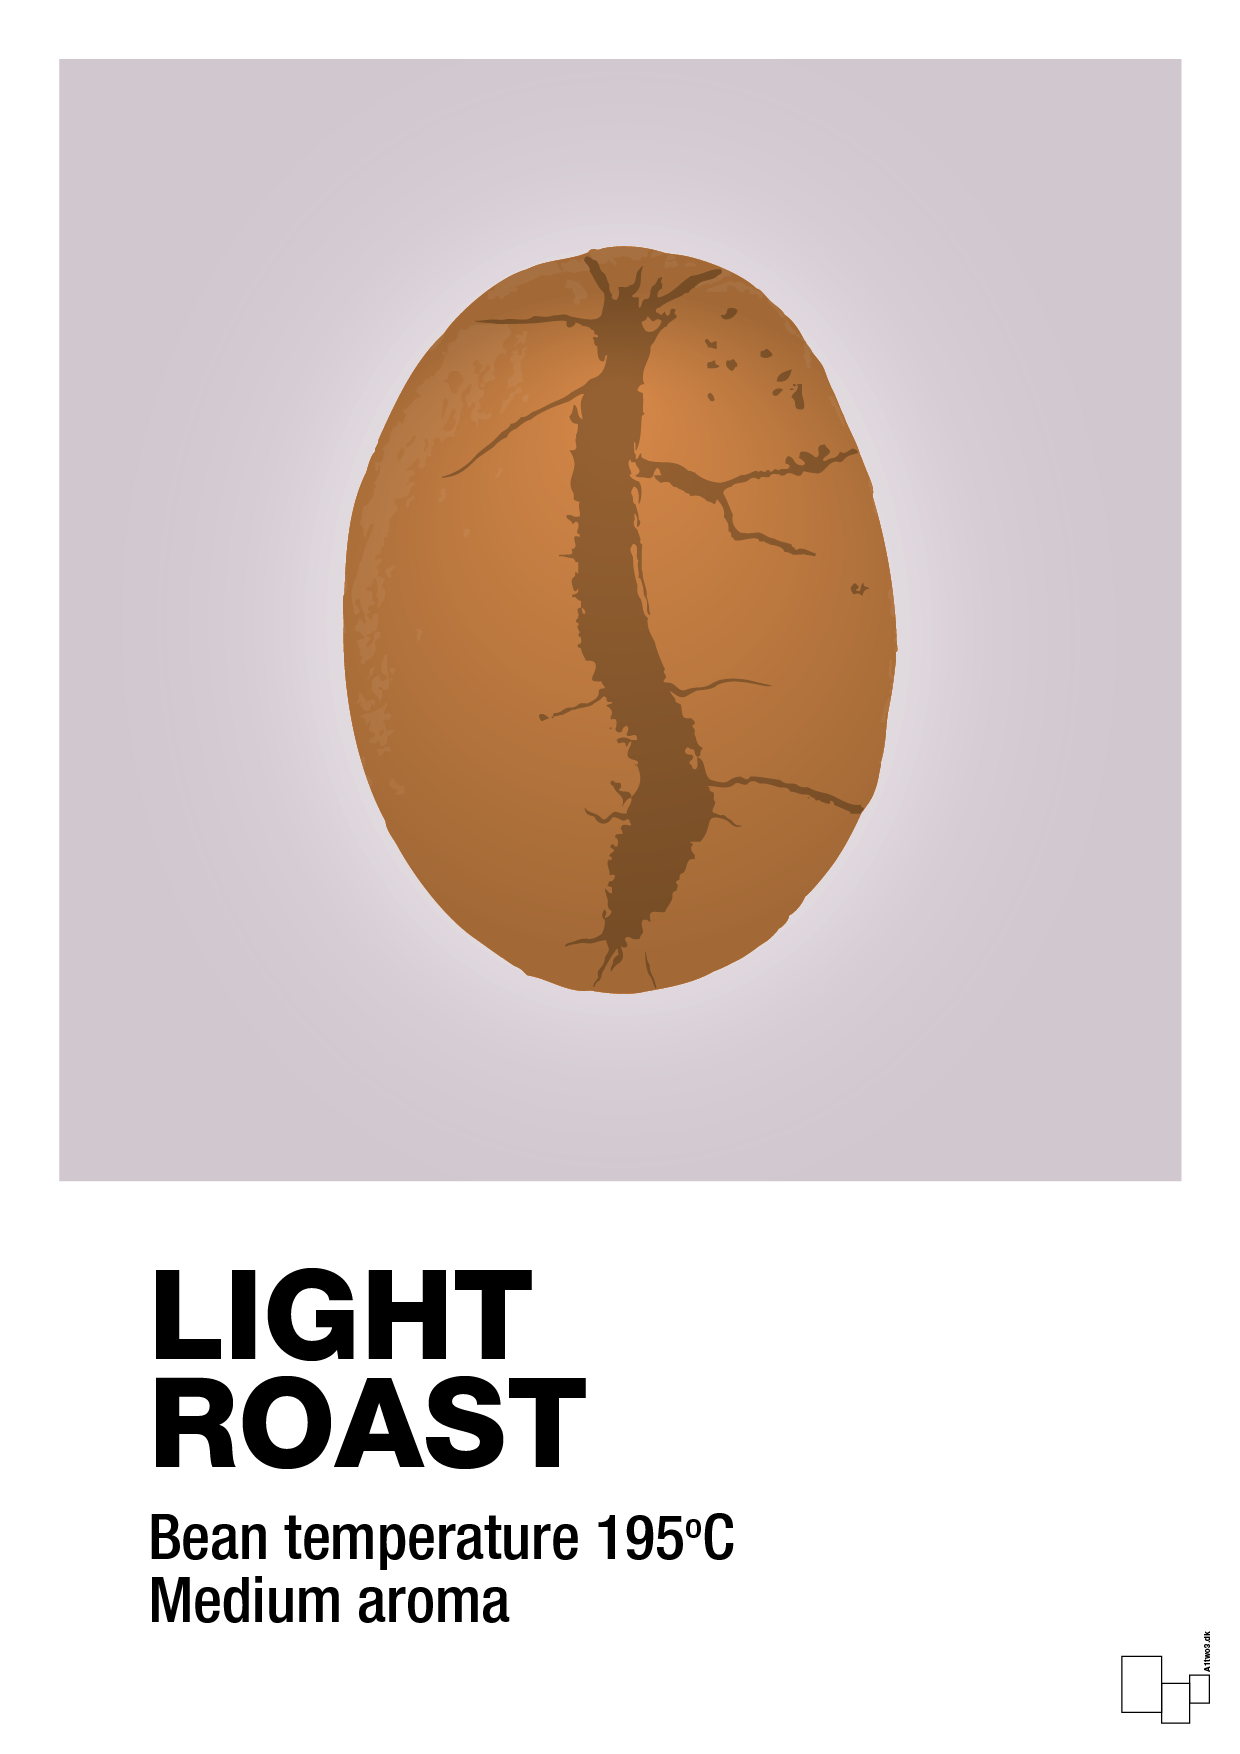 light roast - Plakat med Mad & Drikke i Dusty Lilac